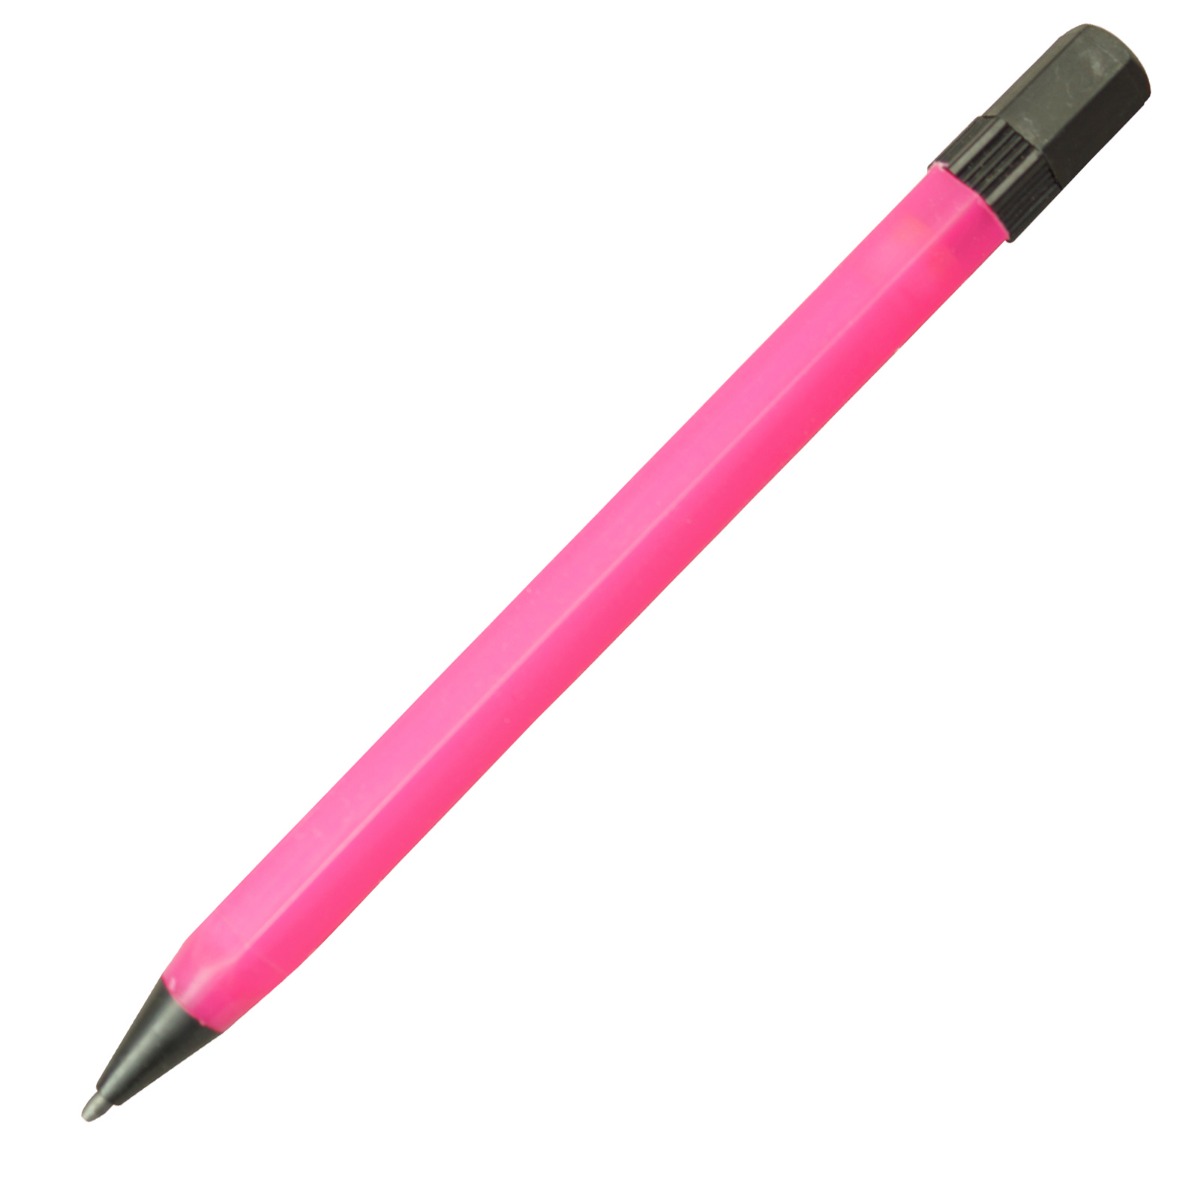  Penhouse Model No :17070 2.0 mm   Pink Color Body Twist Type Tip Pencil